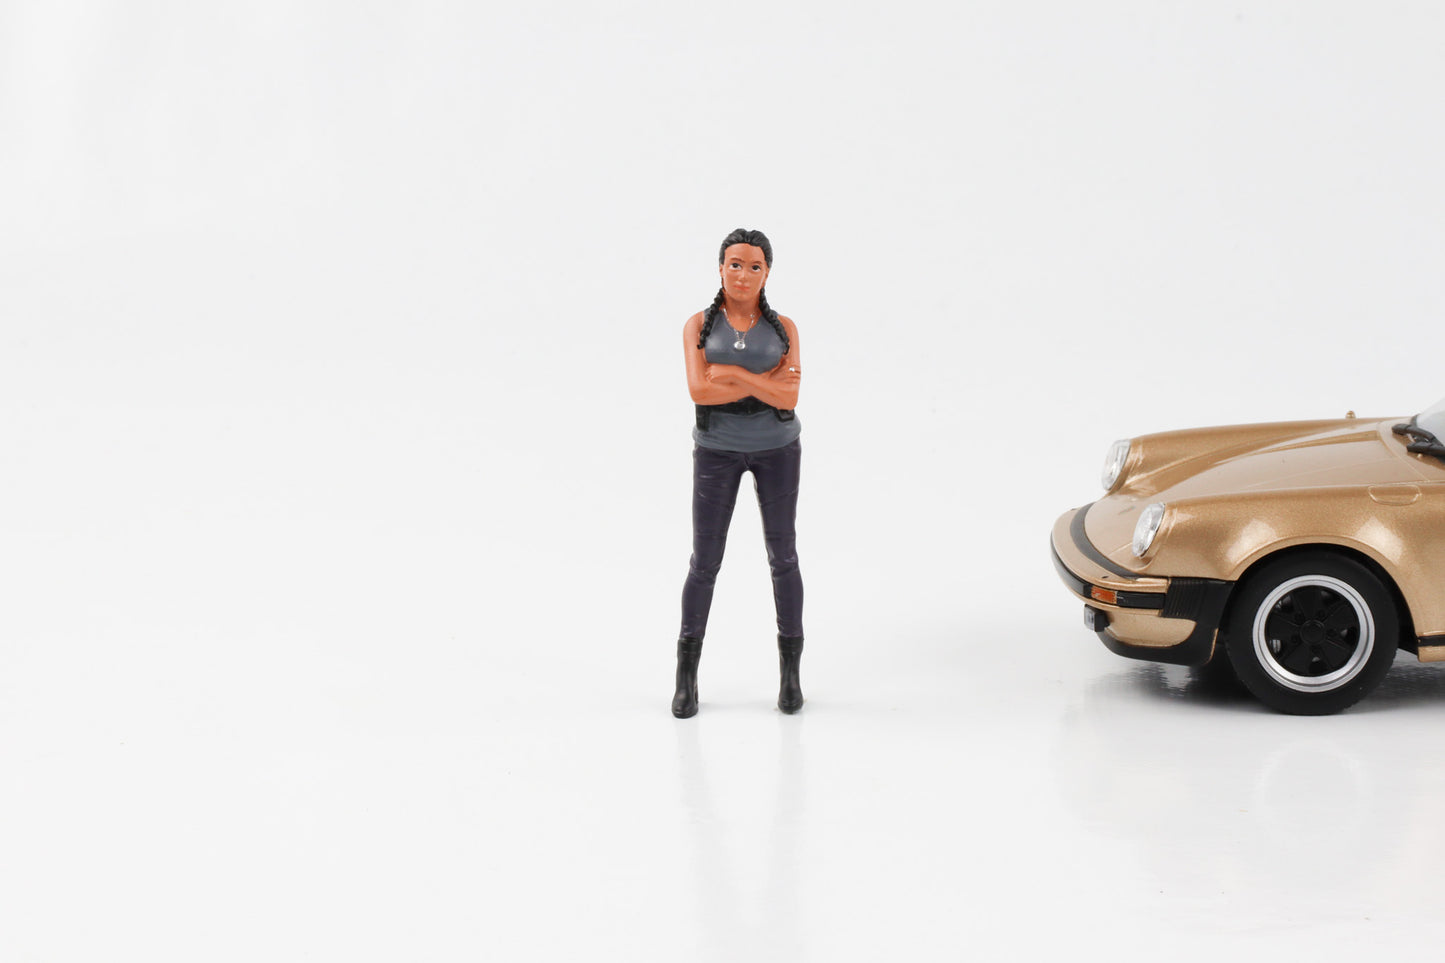 1:24 Figure Car Meet 3 Street Racing Figures Woman Man American Diorama